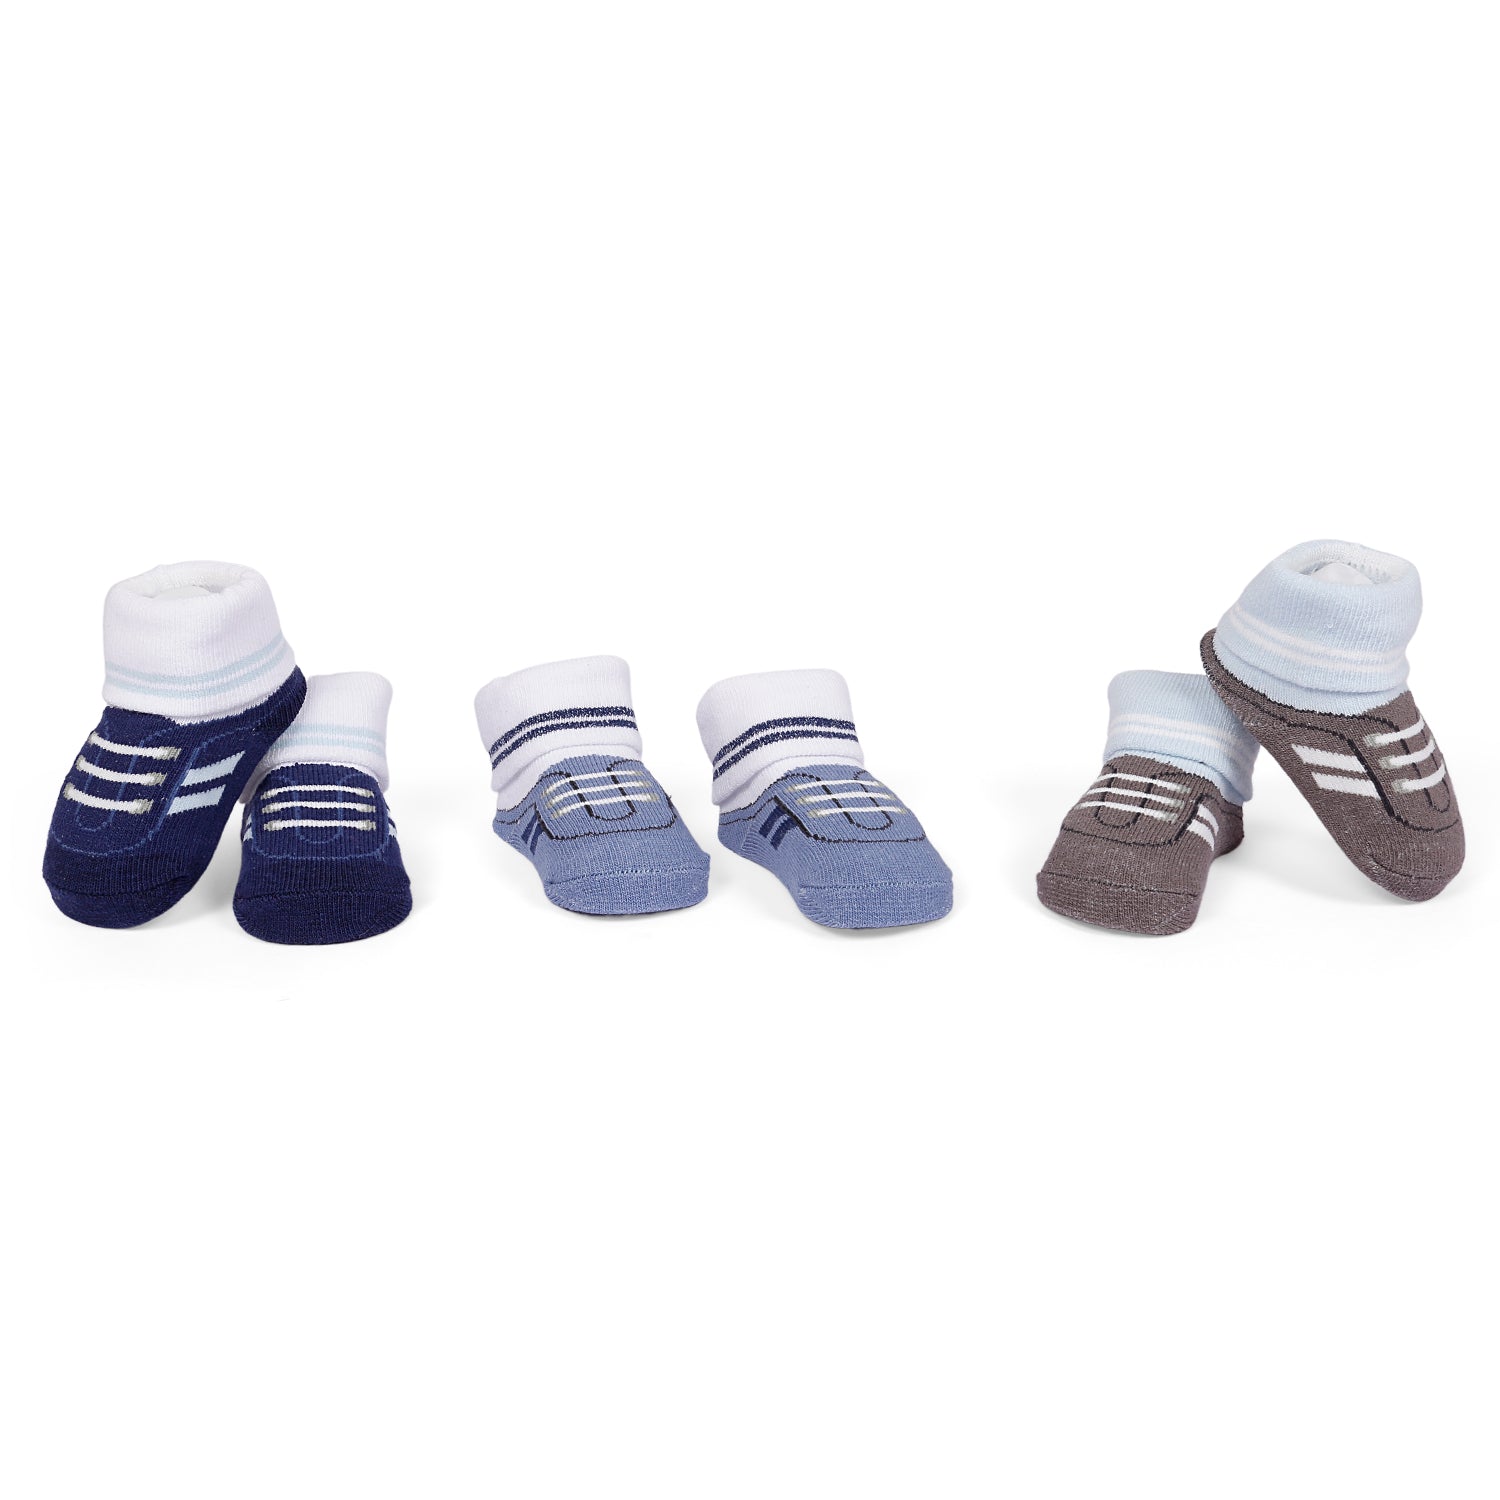 Baby Moo Socks Pack Of 3 Pairs For Newborn Boy Sneaker Print Blue